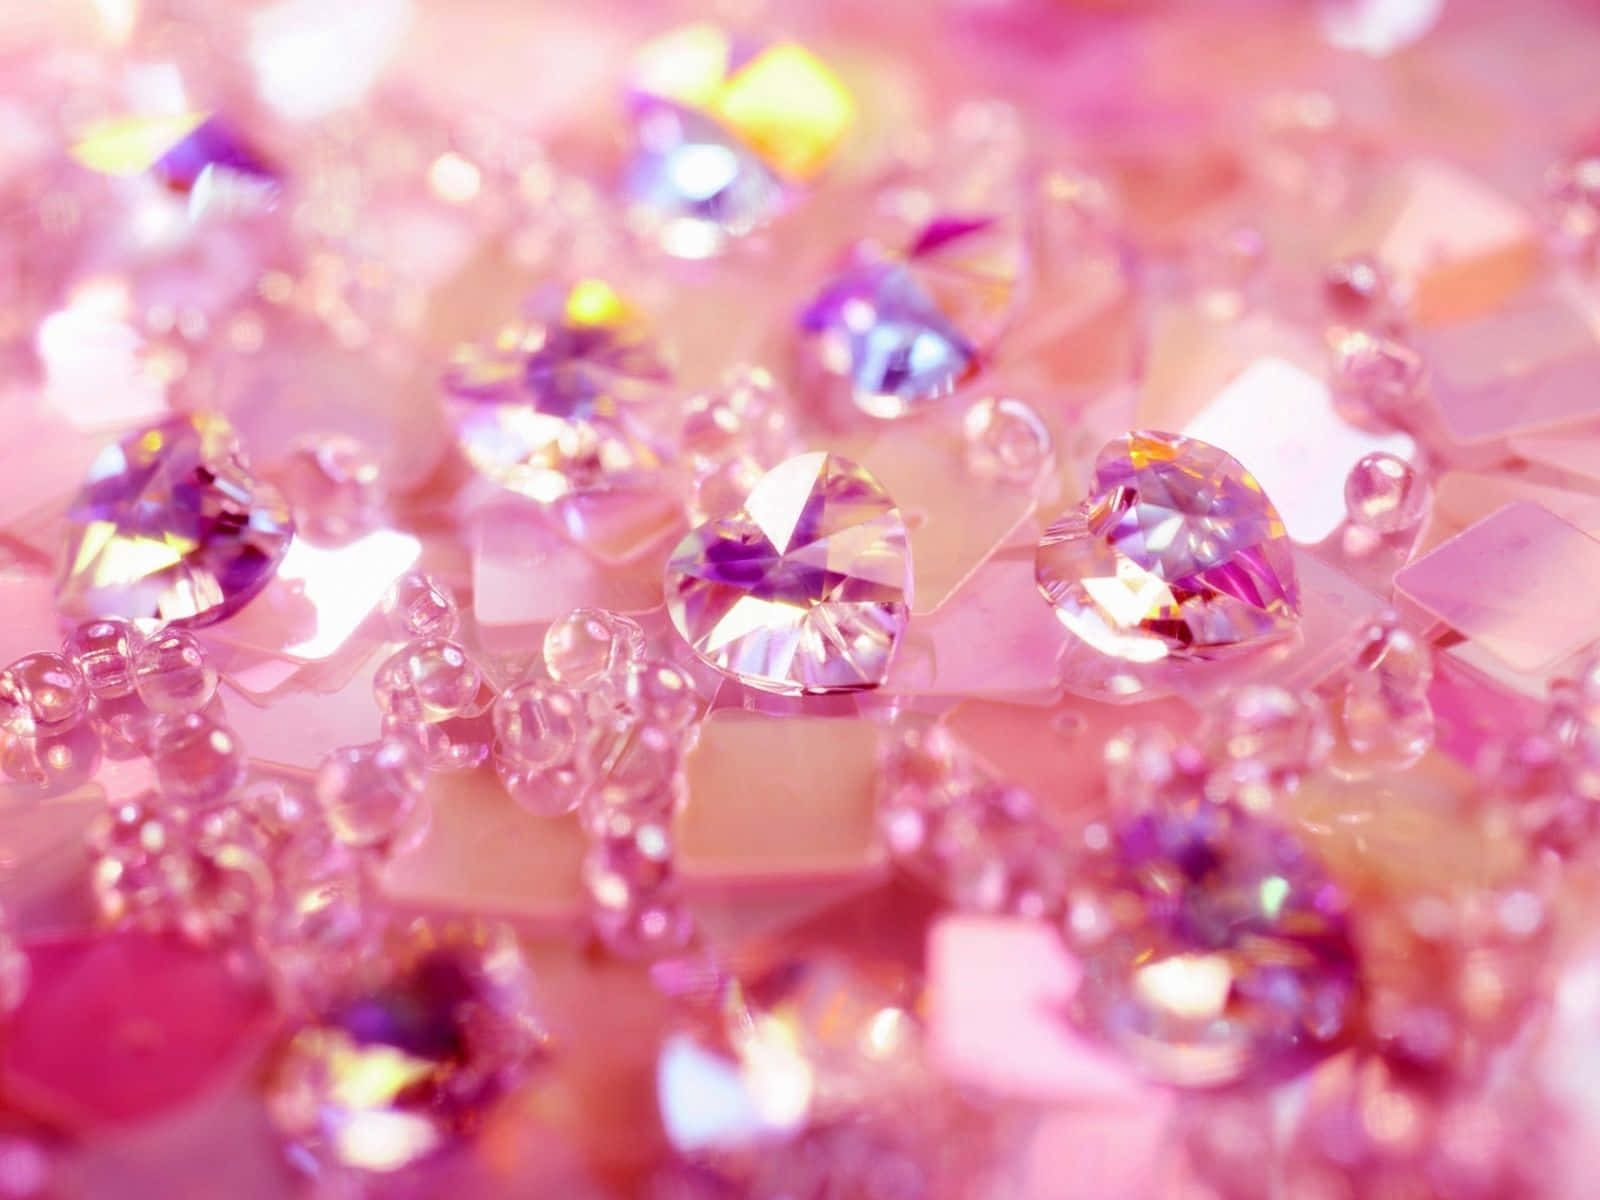 A dazzling pink diamond glistening against a light grey background.